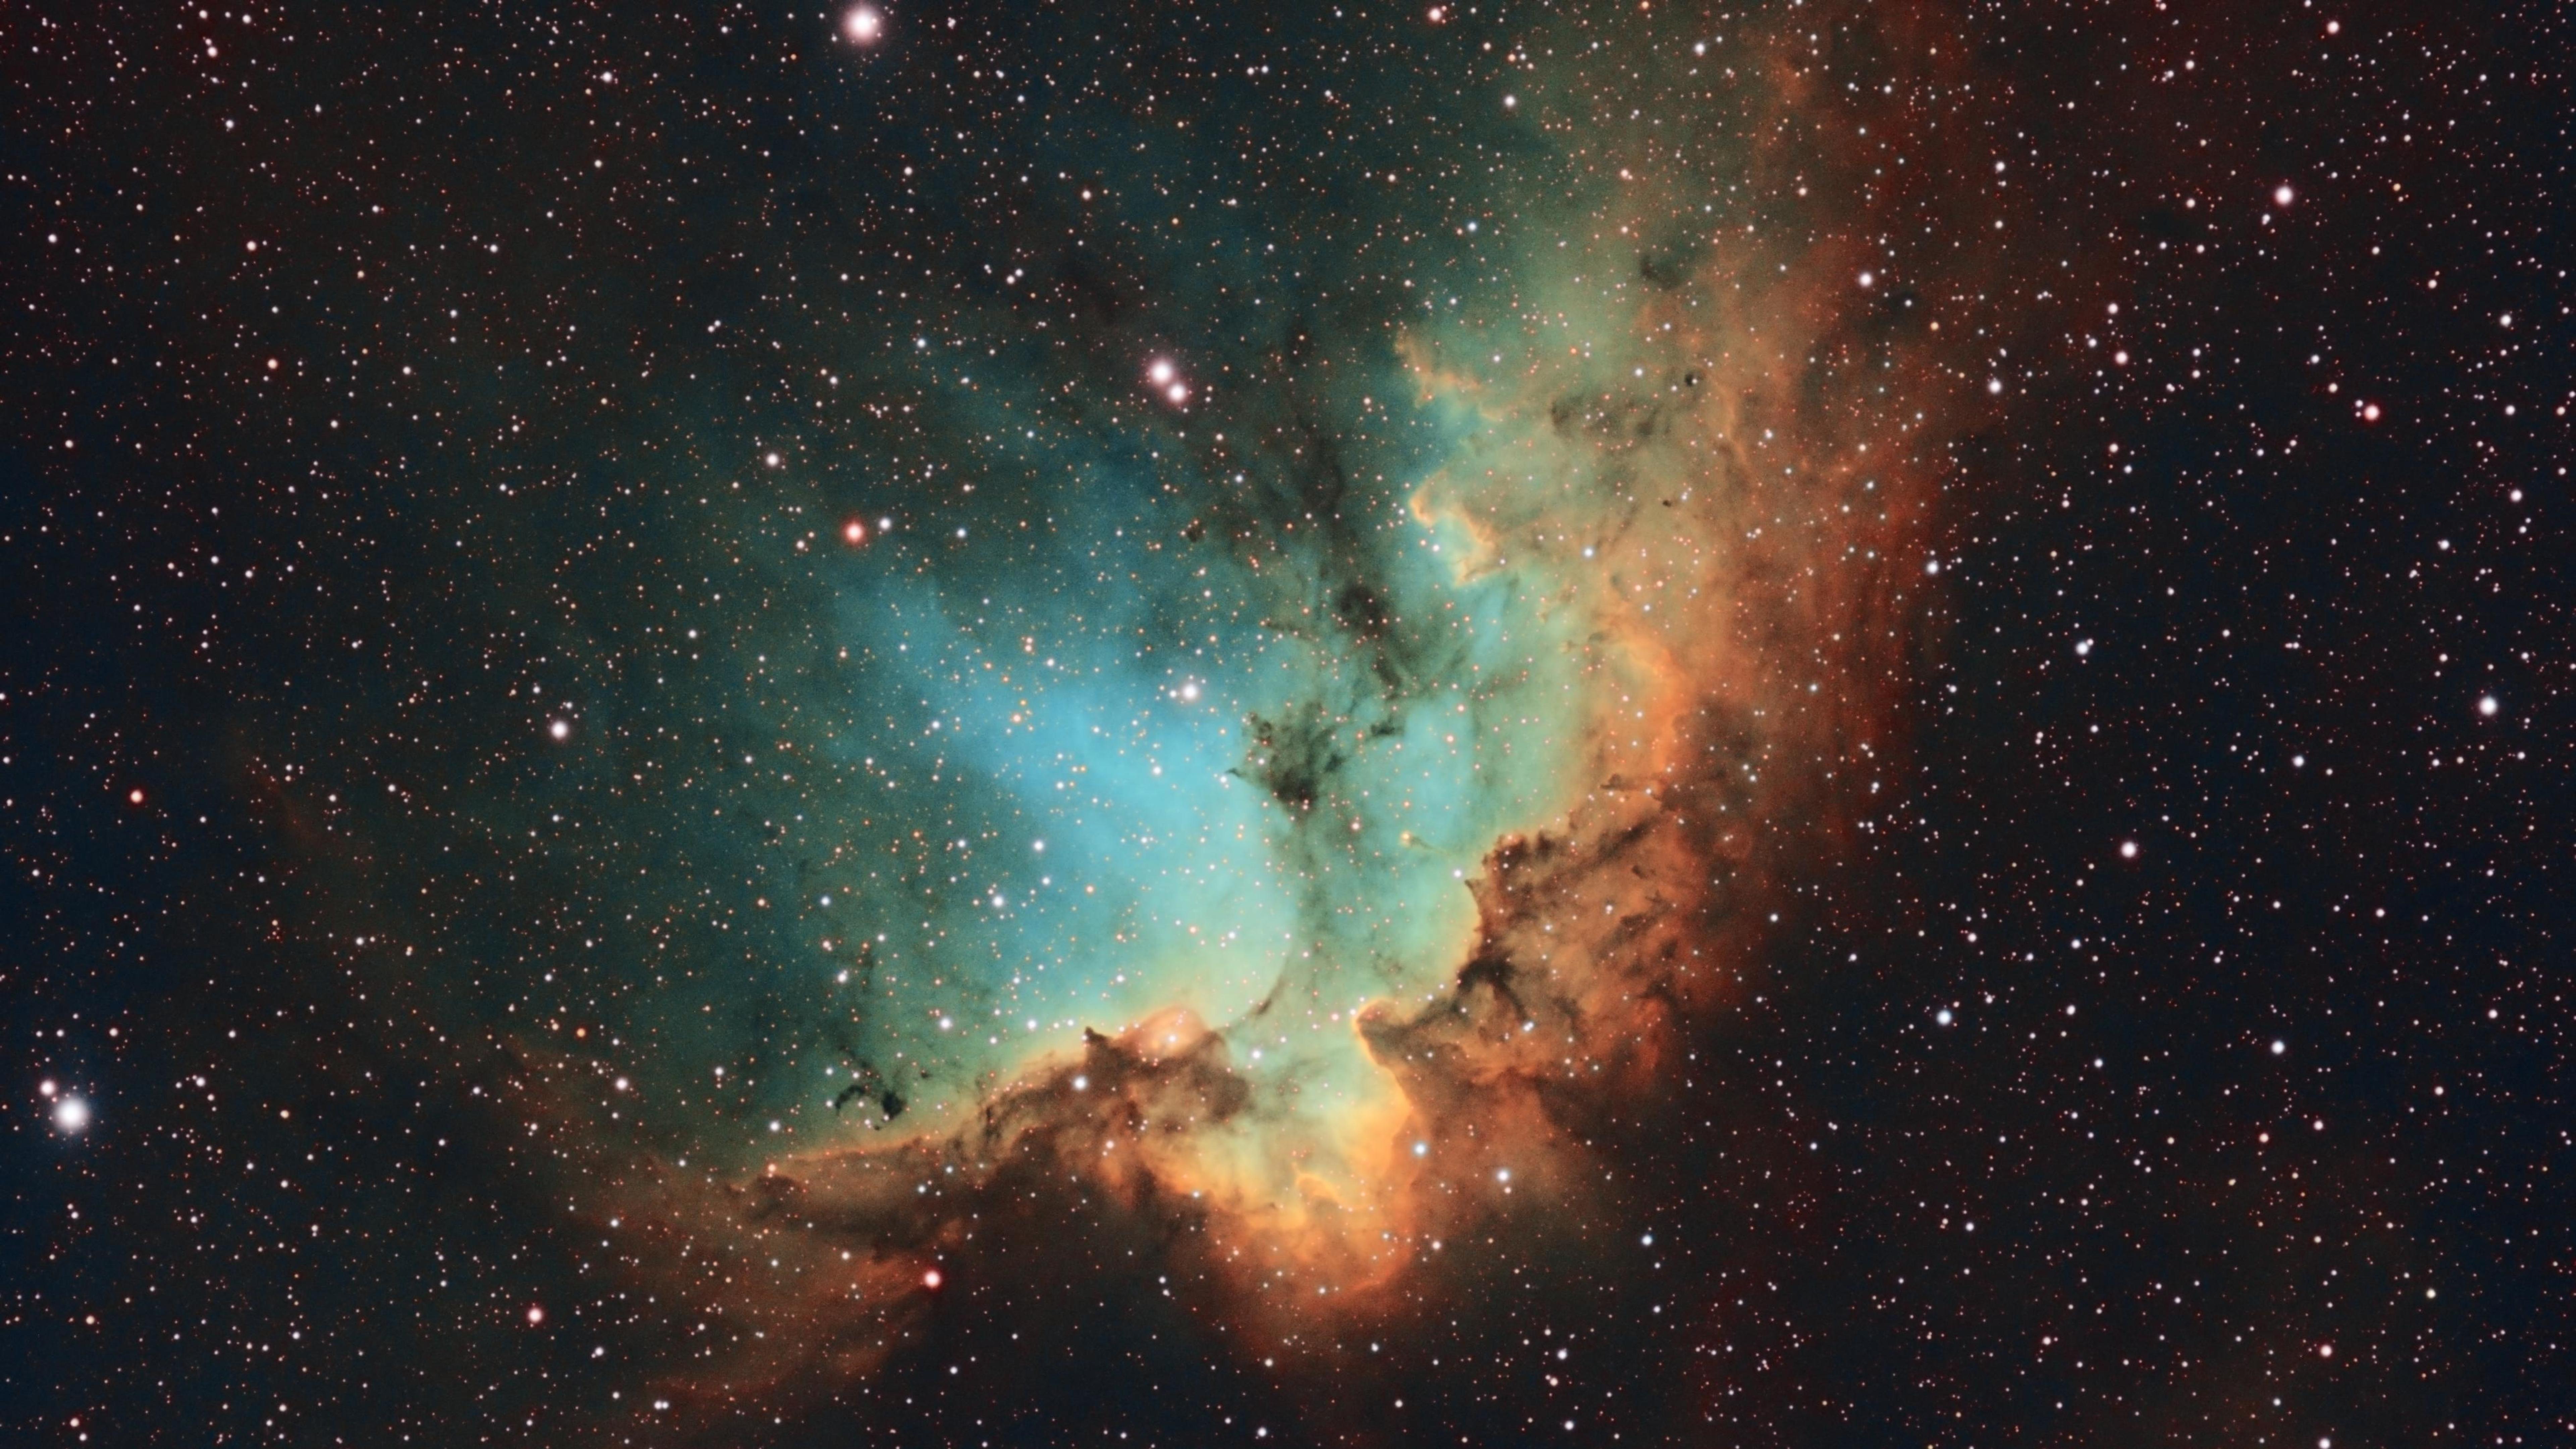 Nebula 8K Wallpaper, HD Space 4K Wallpaper, Image